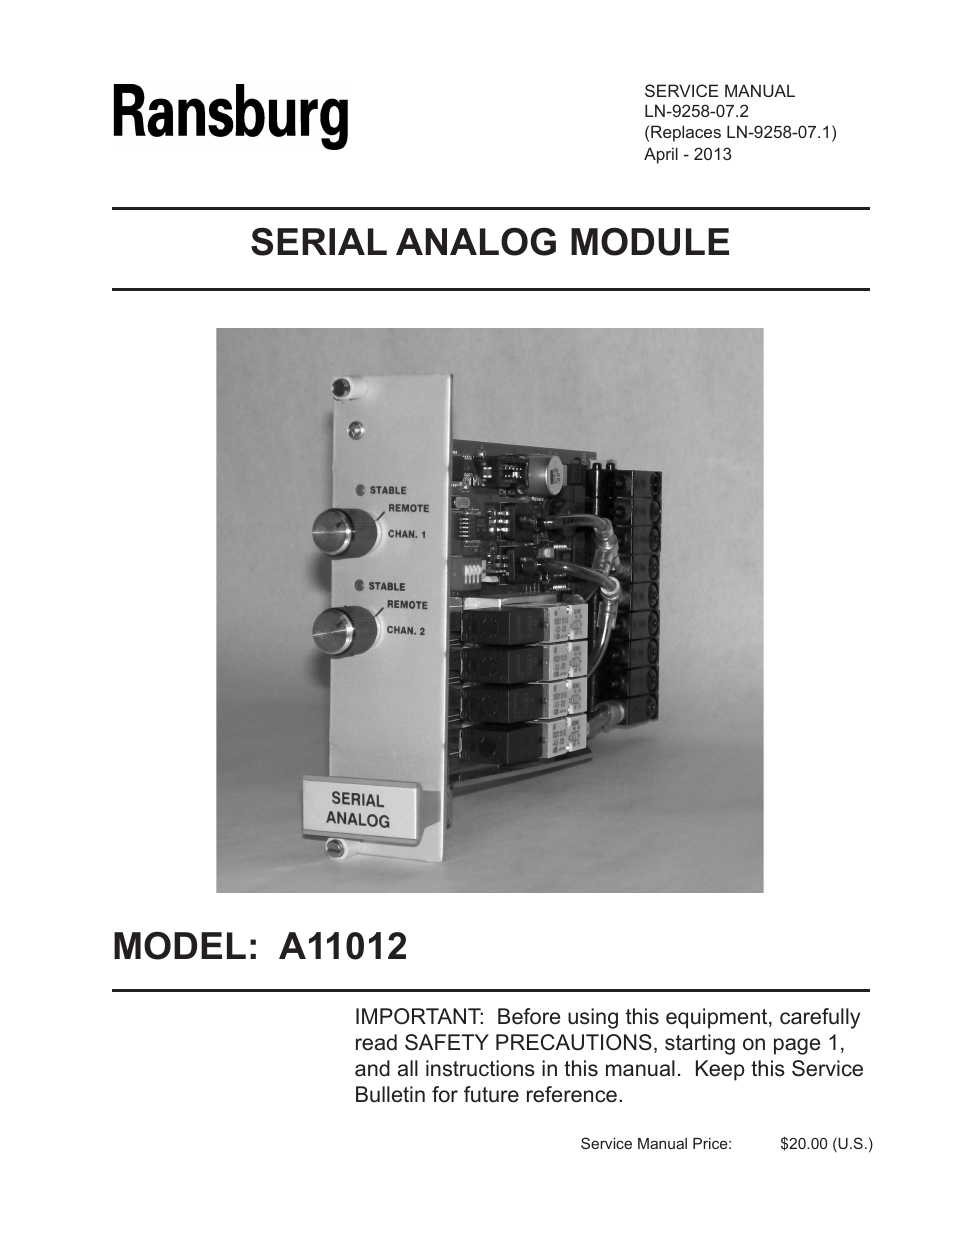 Serial Analog Module A11012